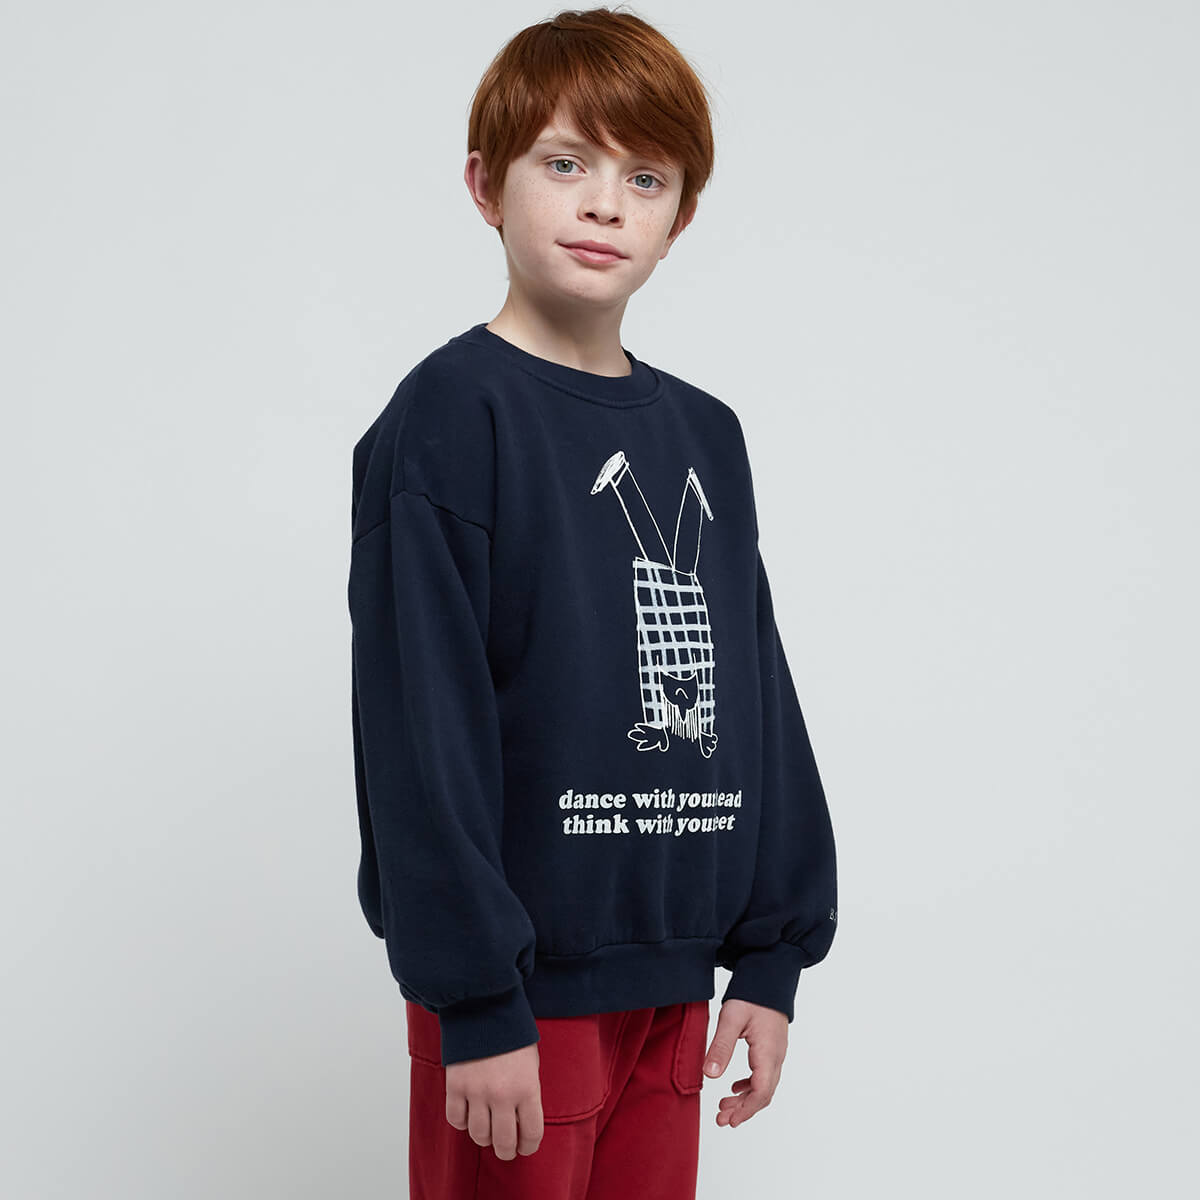 Headstand Child Sweatshirt by Bobo Choses – Junior Edition